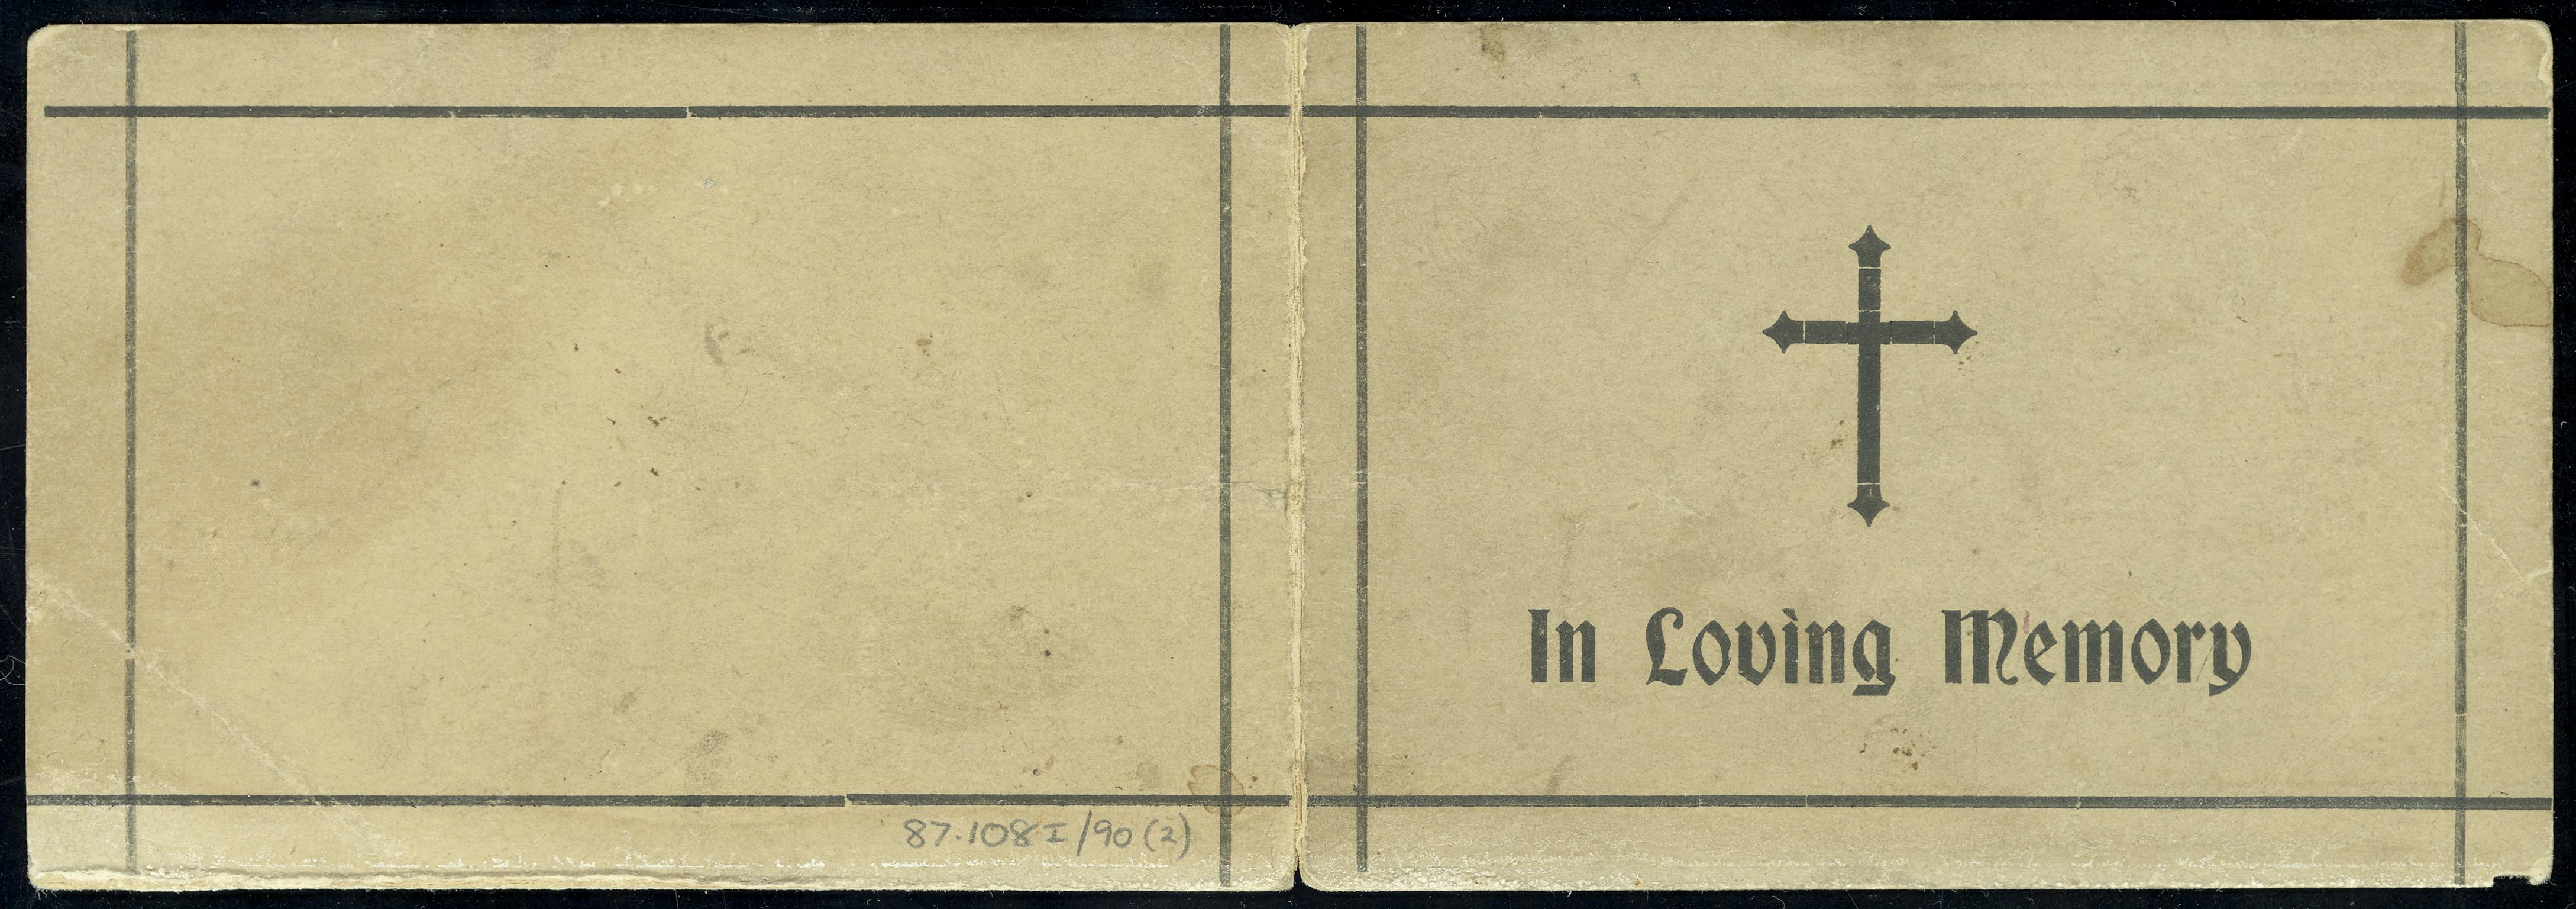 Universal Colliery, Senghenydd, memorial card